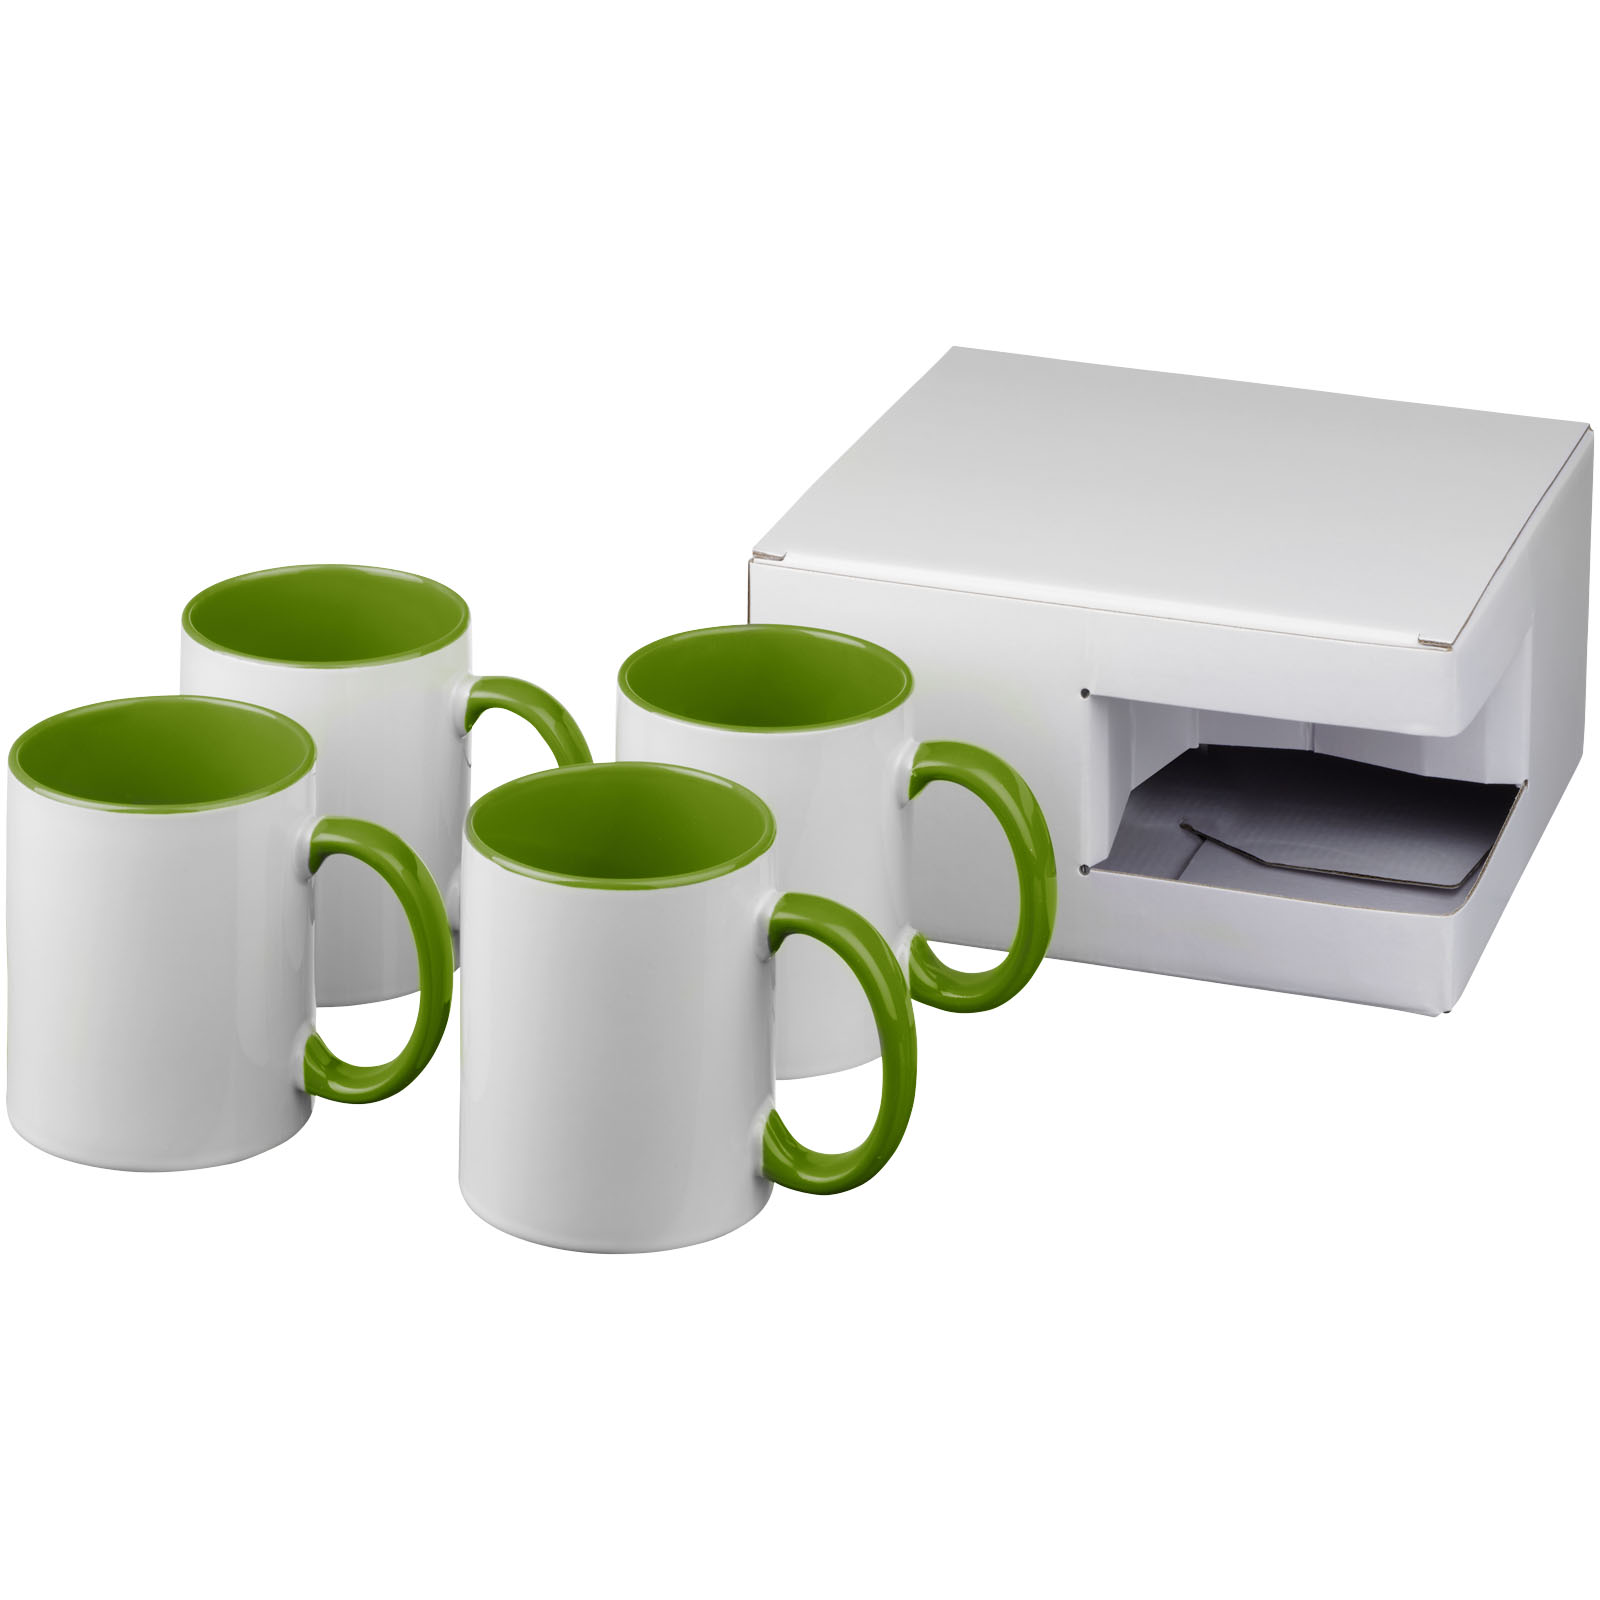 Drinkware - Ceramic sublimation mug 4-pieces gift set